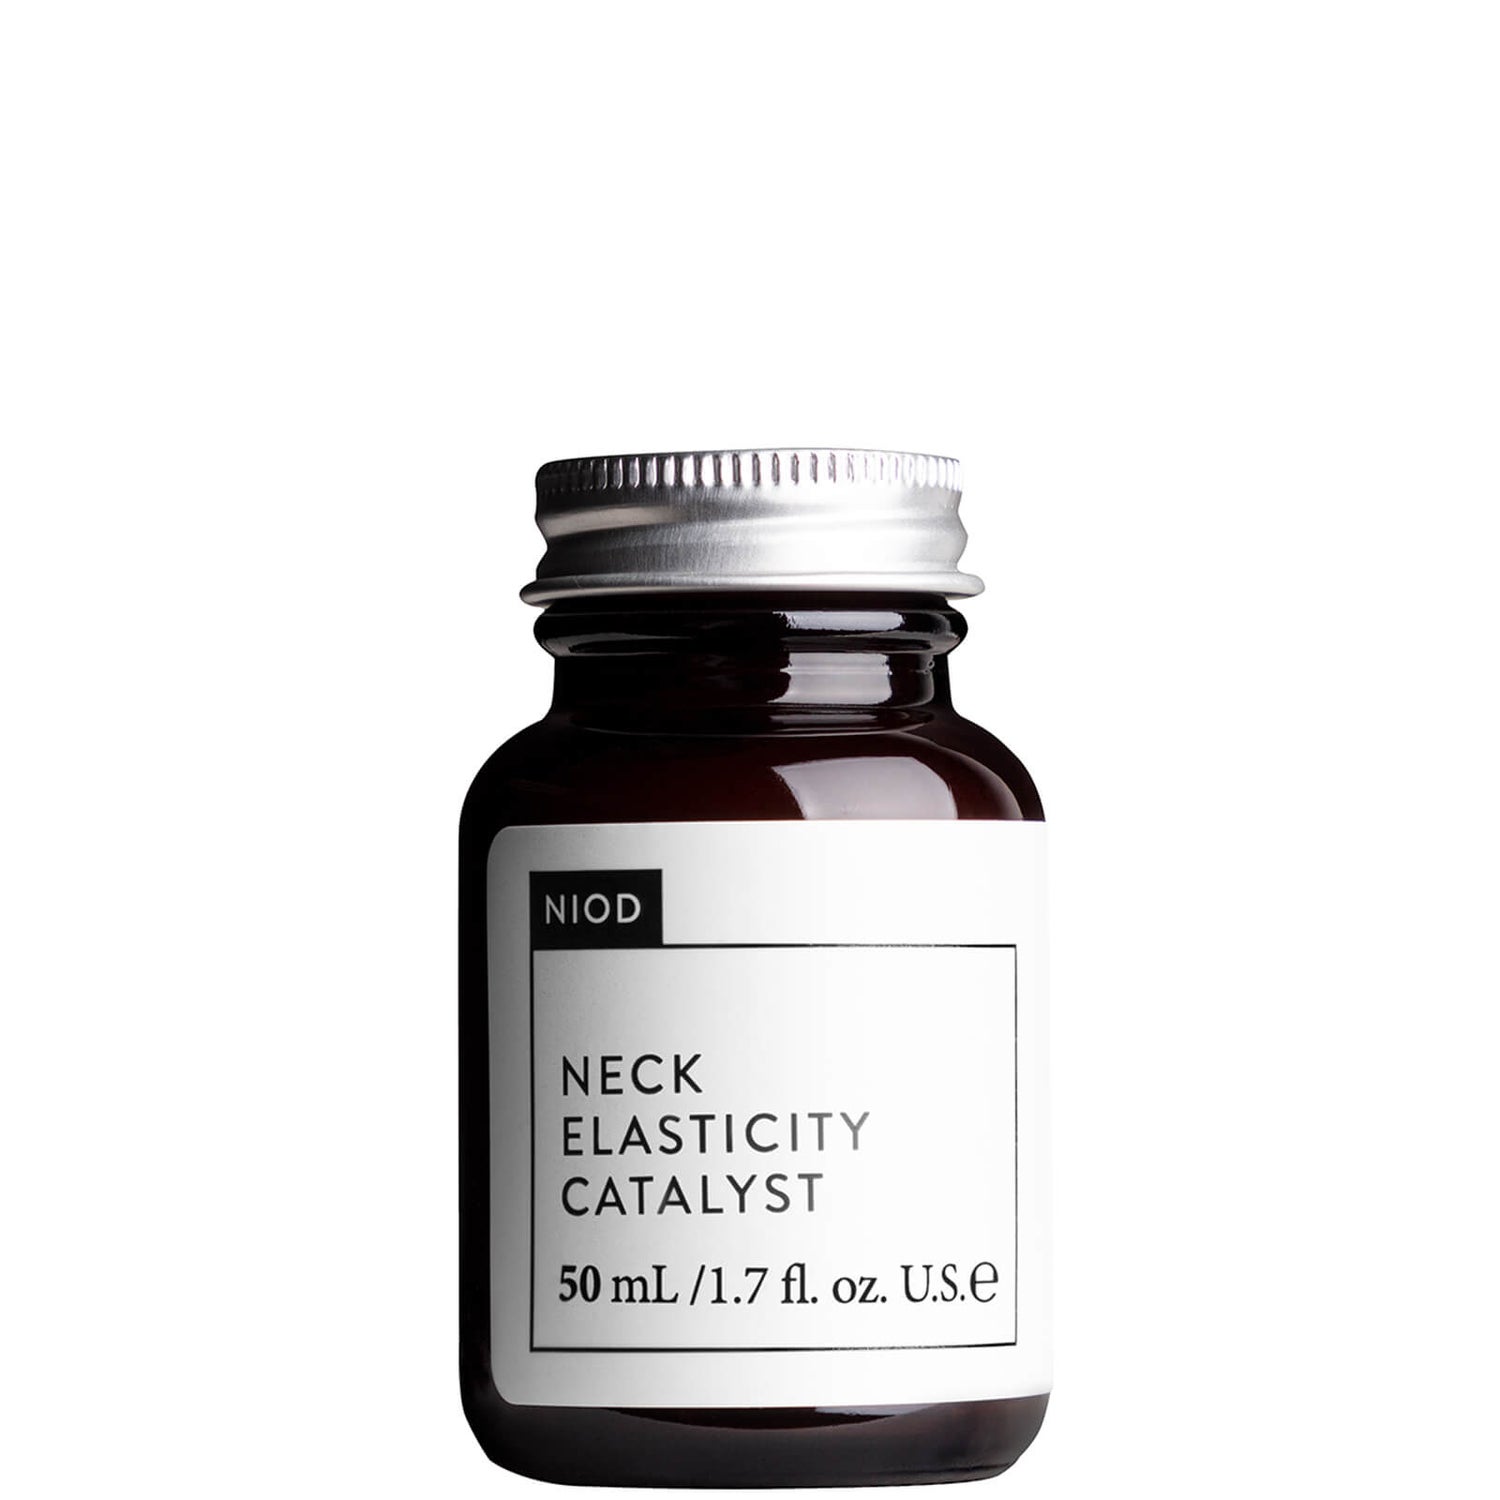 NIOD Elasticity Catalyst Neck Serum 50 ml